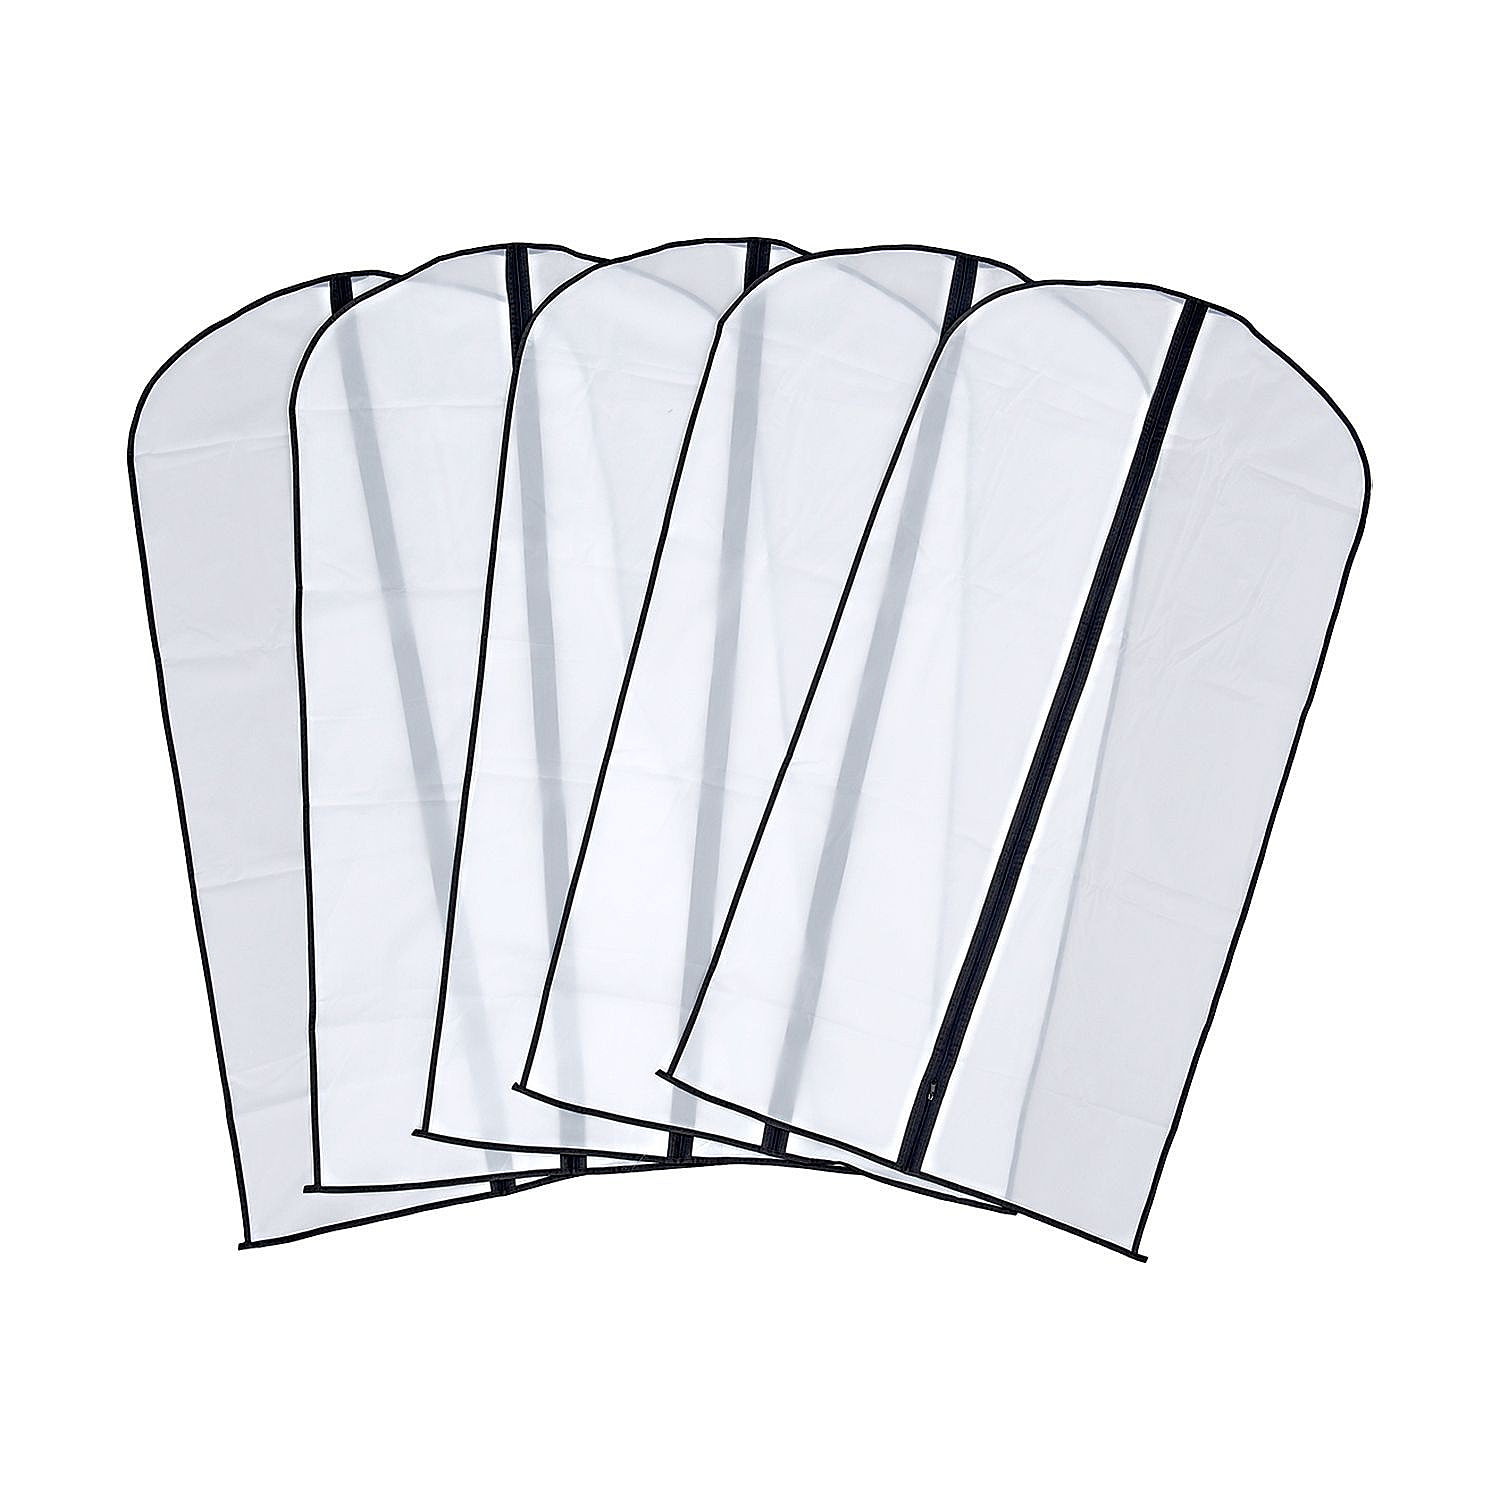 Set-of-5-Dustproof-Garment-Bag-with-Zipper-Size-118x59-Cm-White